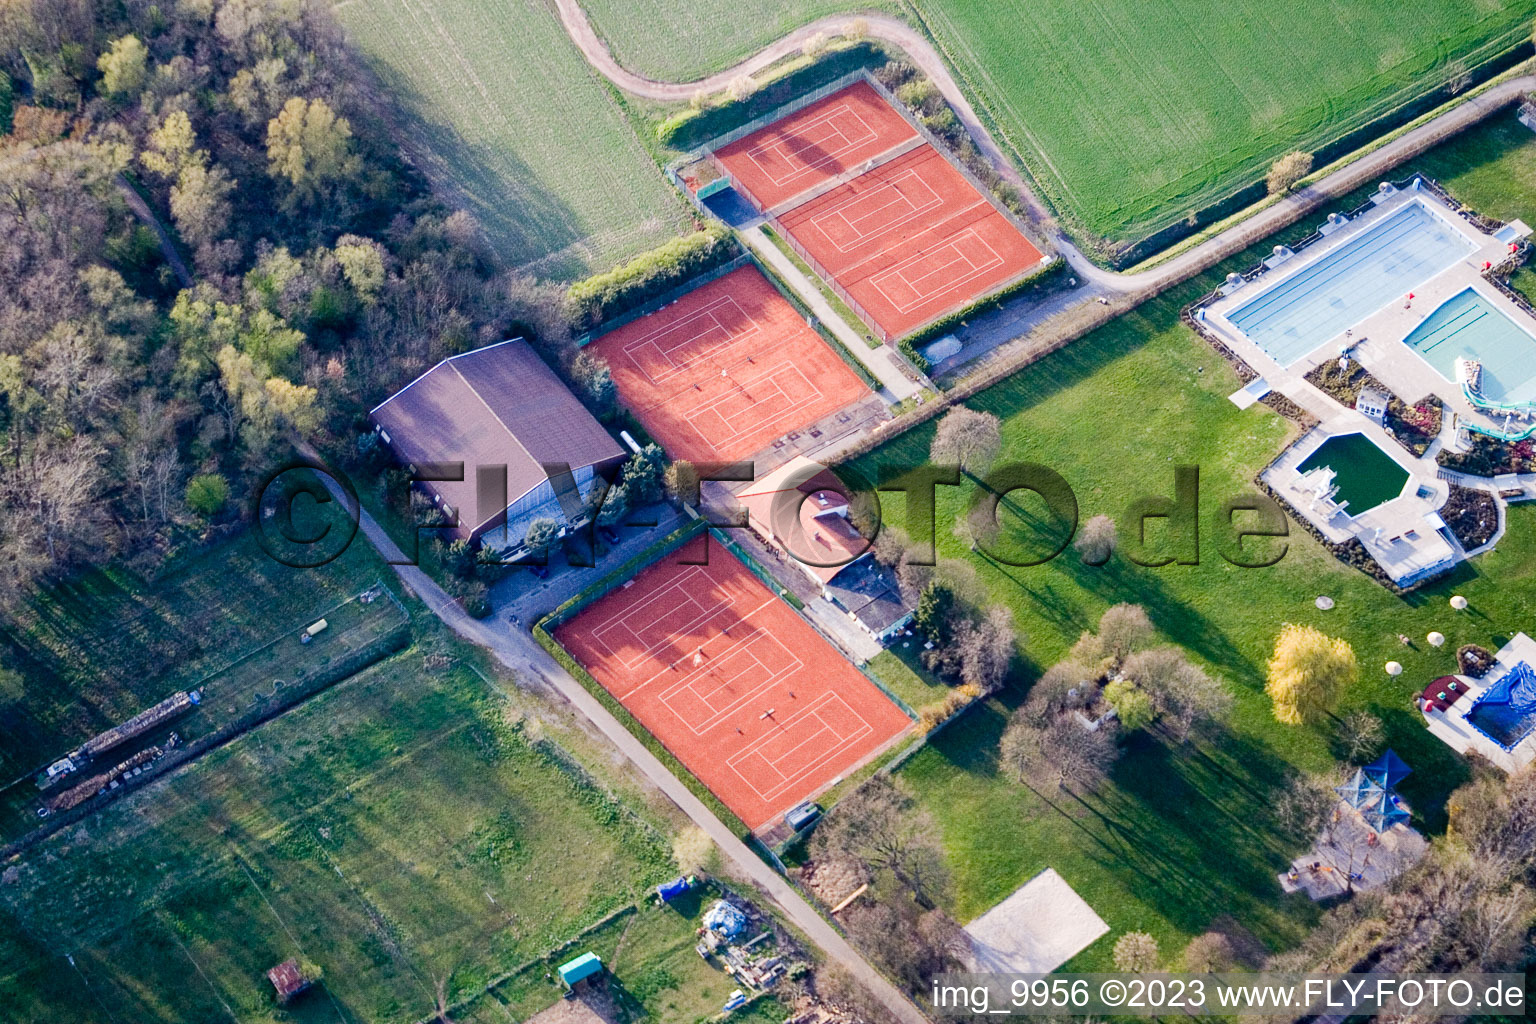 Tennis court in Bellheim in the state Rhineland-Palatinate, Germany